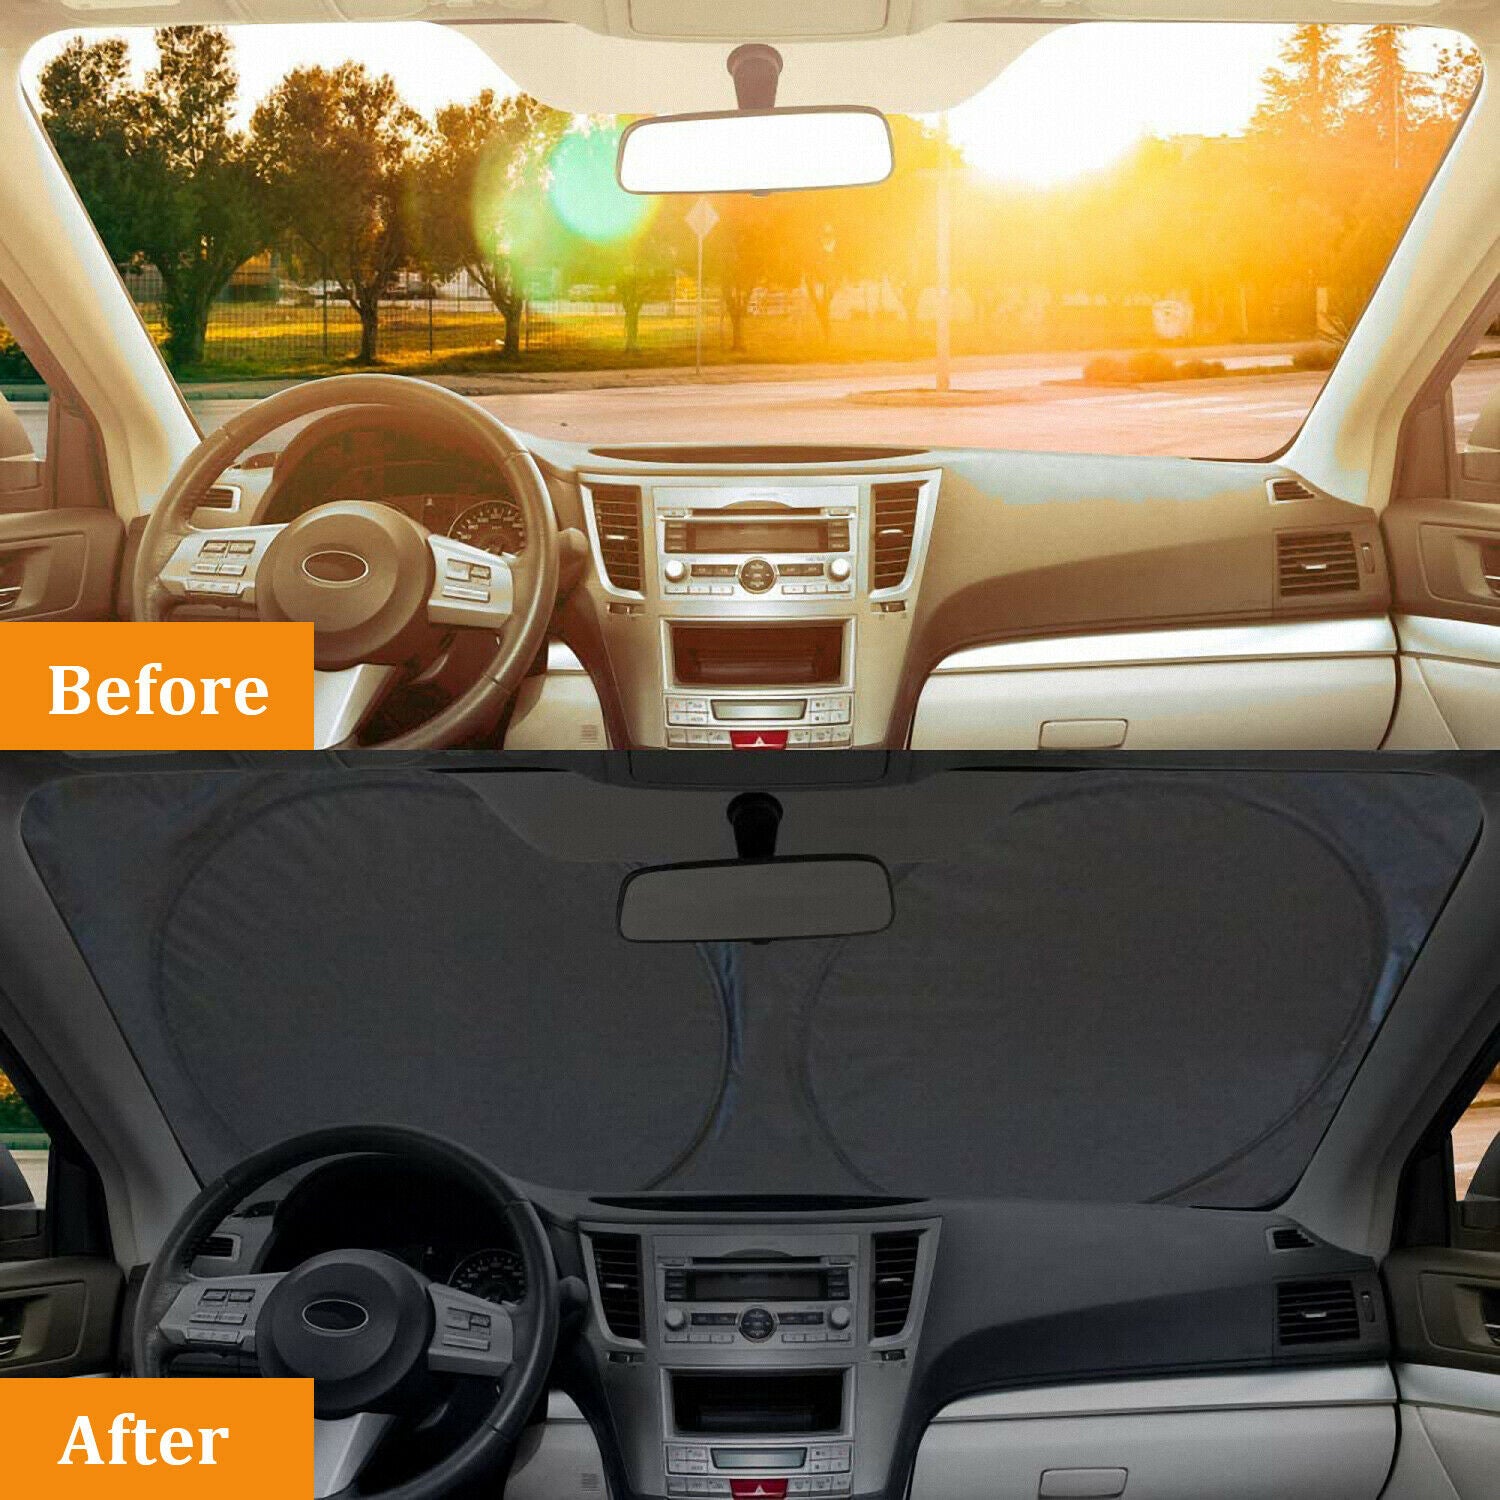 Car Sun Shade Visor Windshield Window Cover Reflective Foldable UV Heat Protection